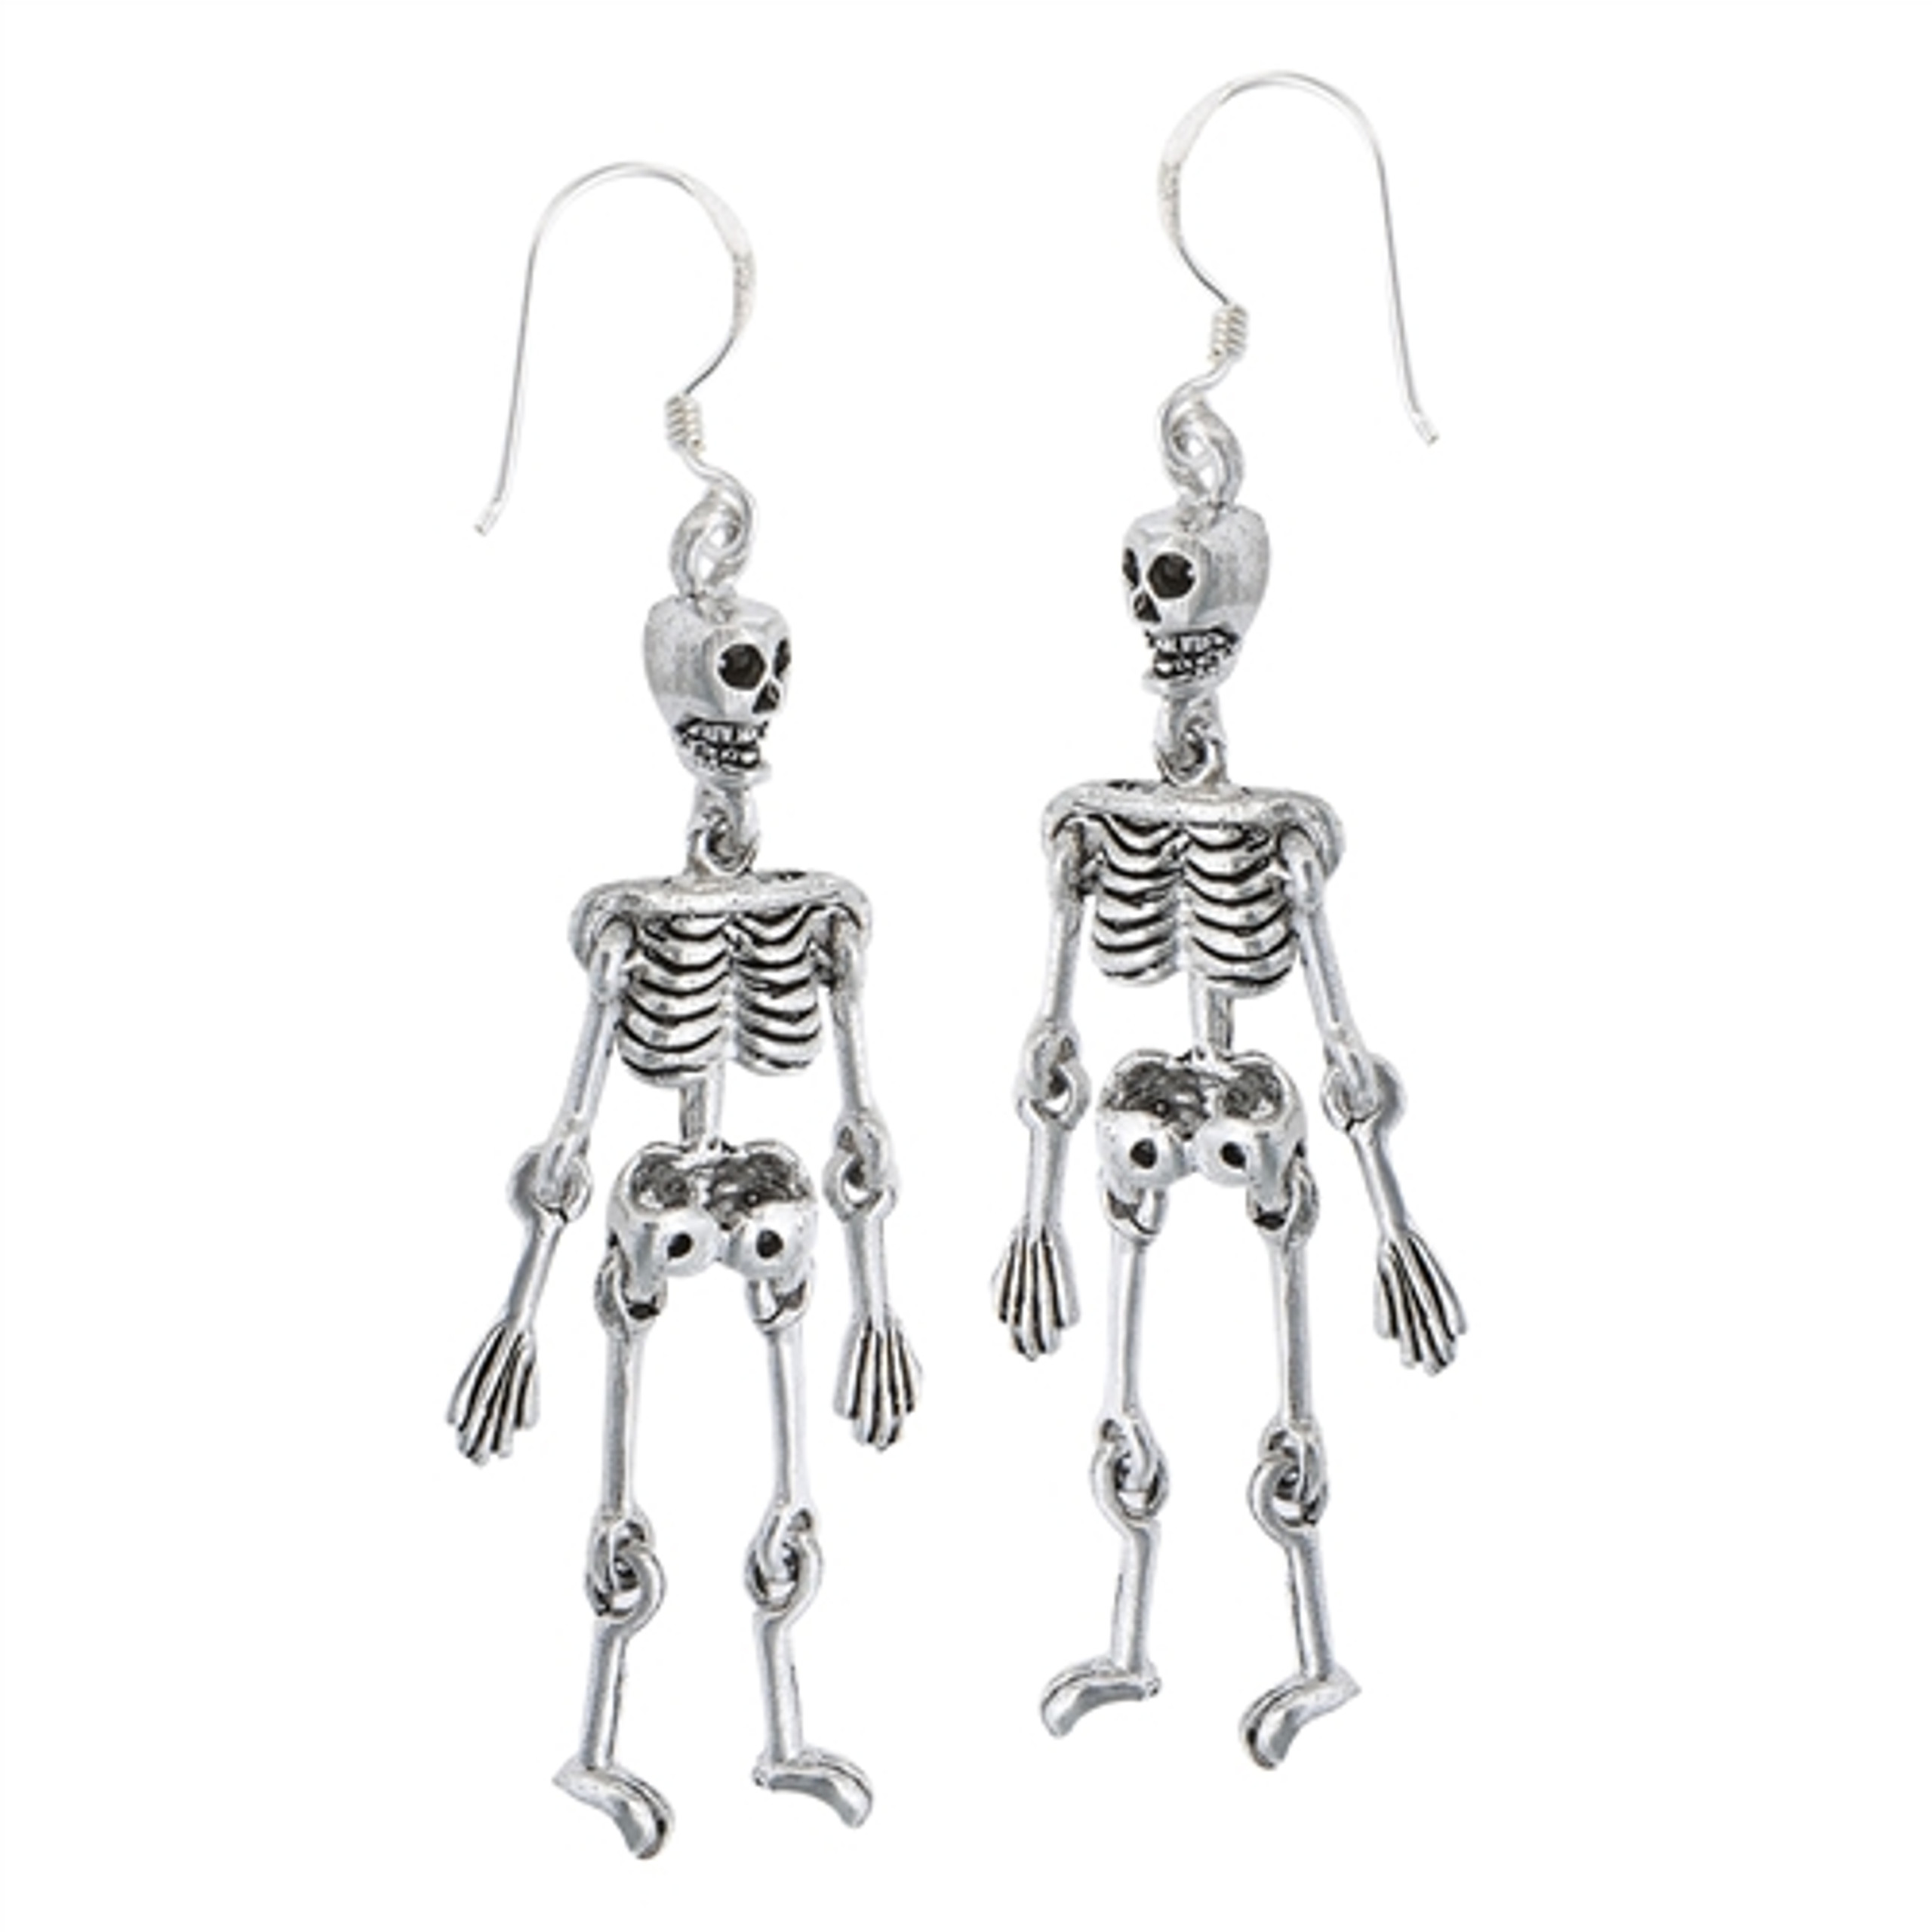 The Dangling Dead Sterling Skeleton earrings